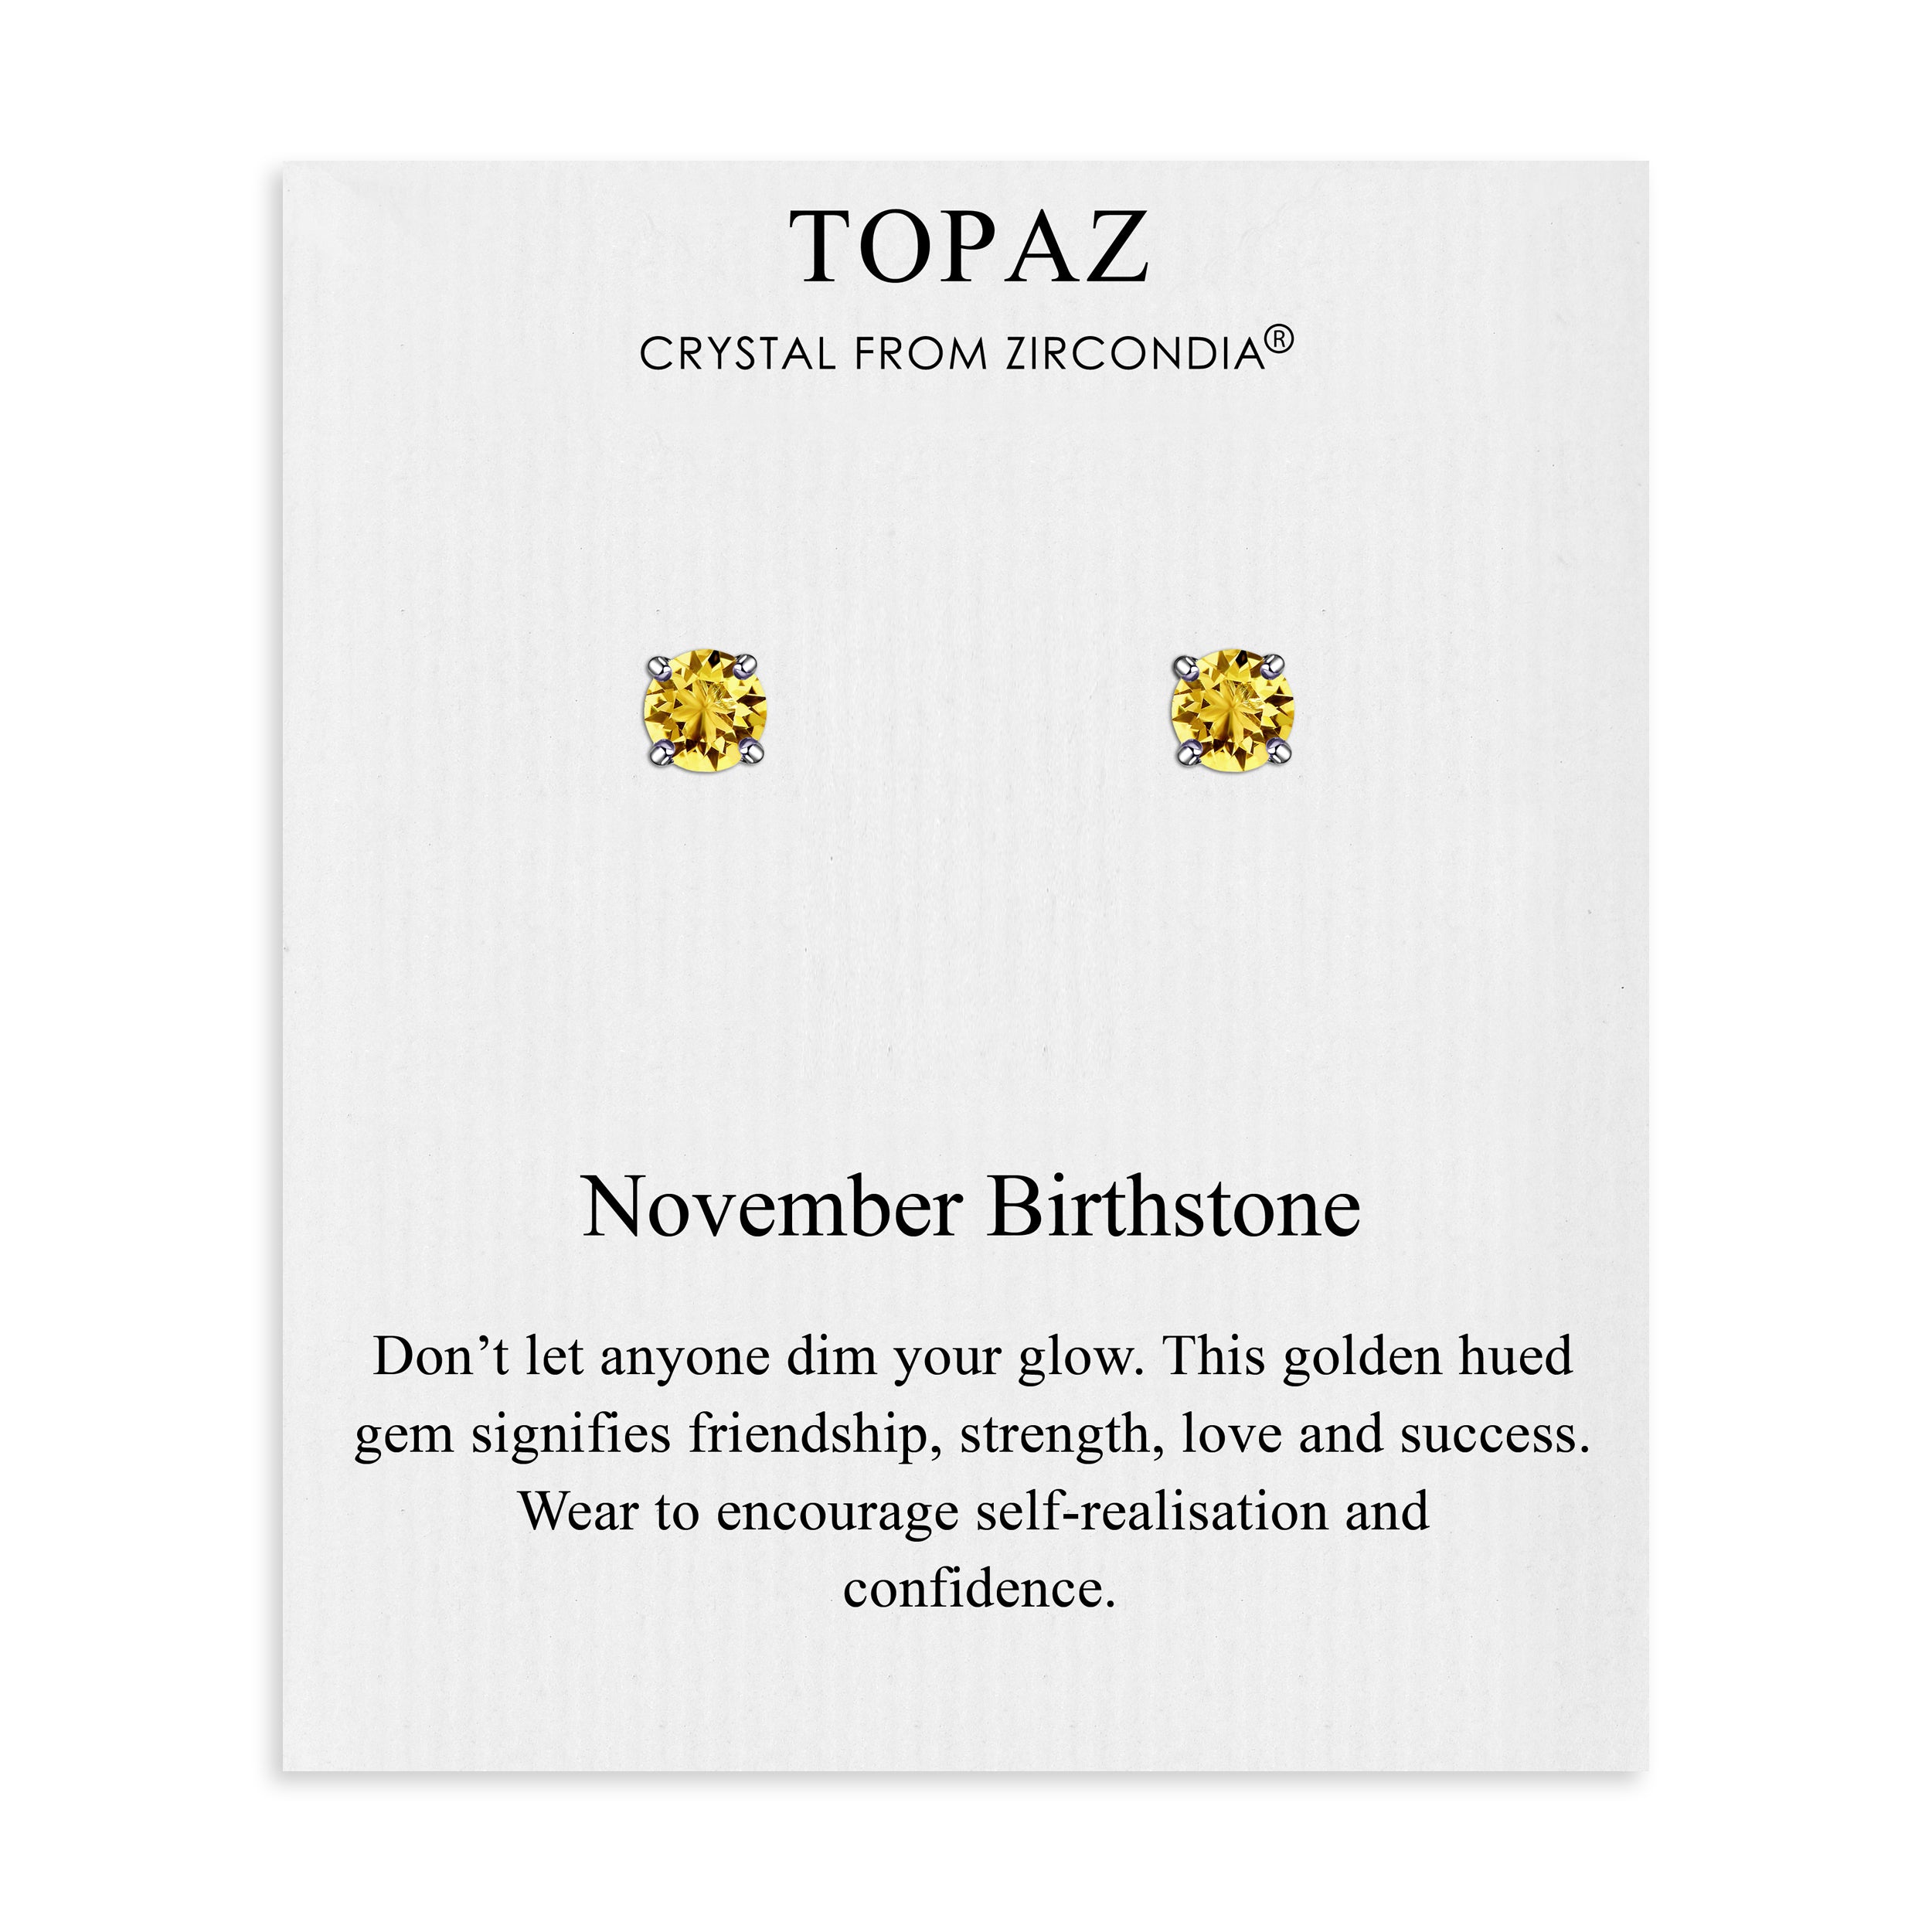 November (Topaz) Birthstone Earrings Created with Zircondia® Crystals by Philip Jones Jewellery